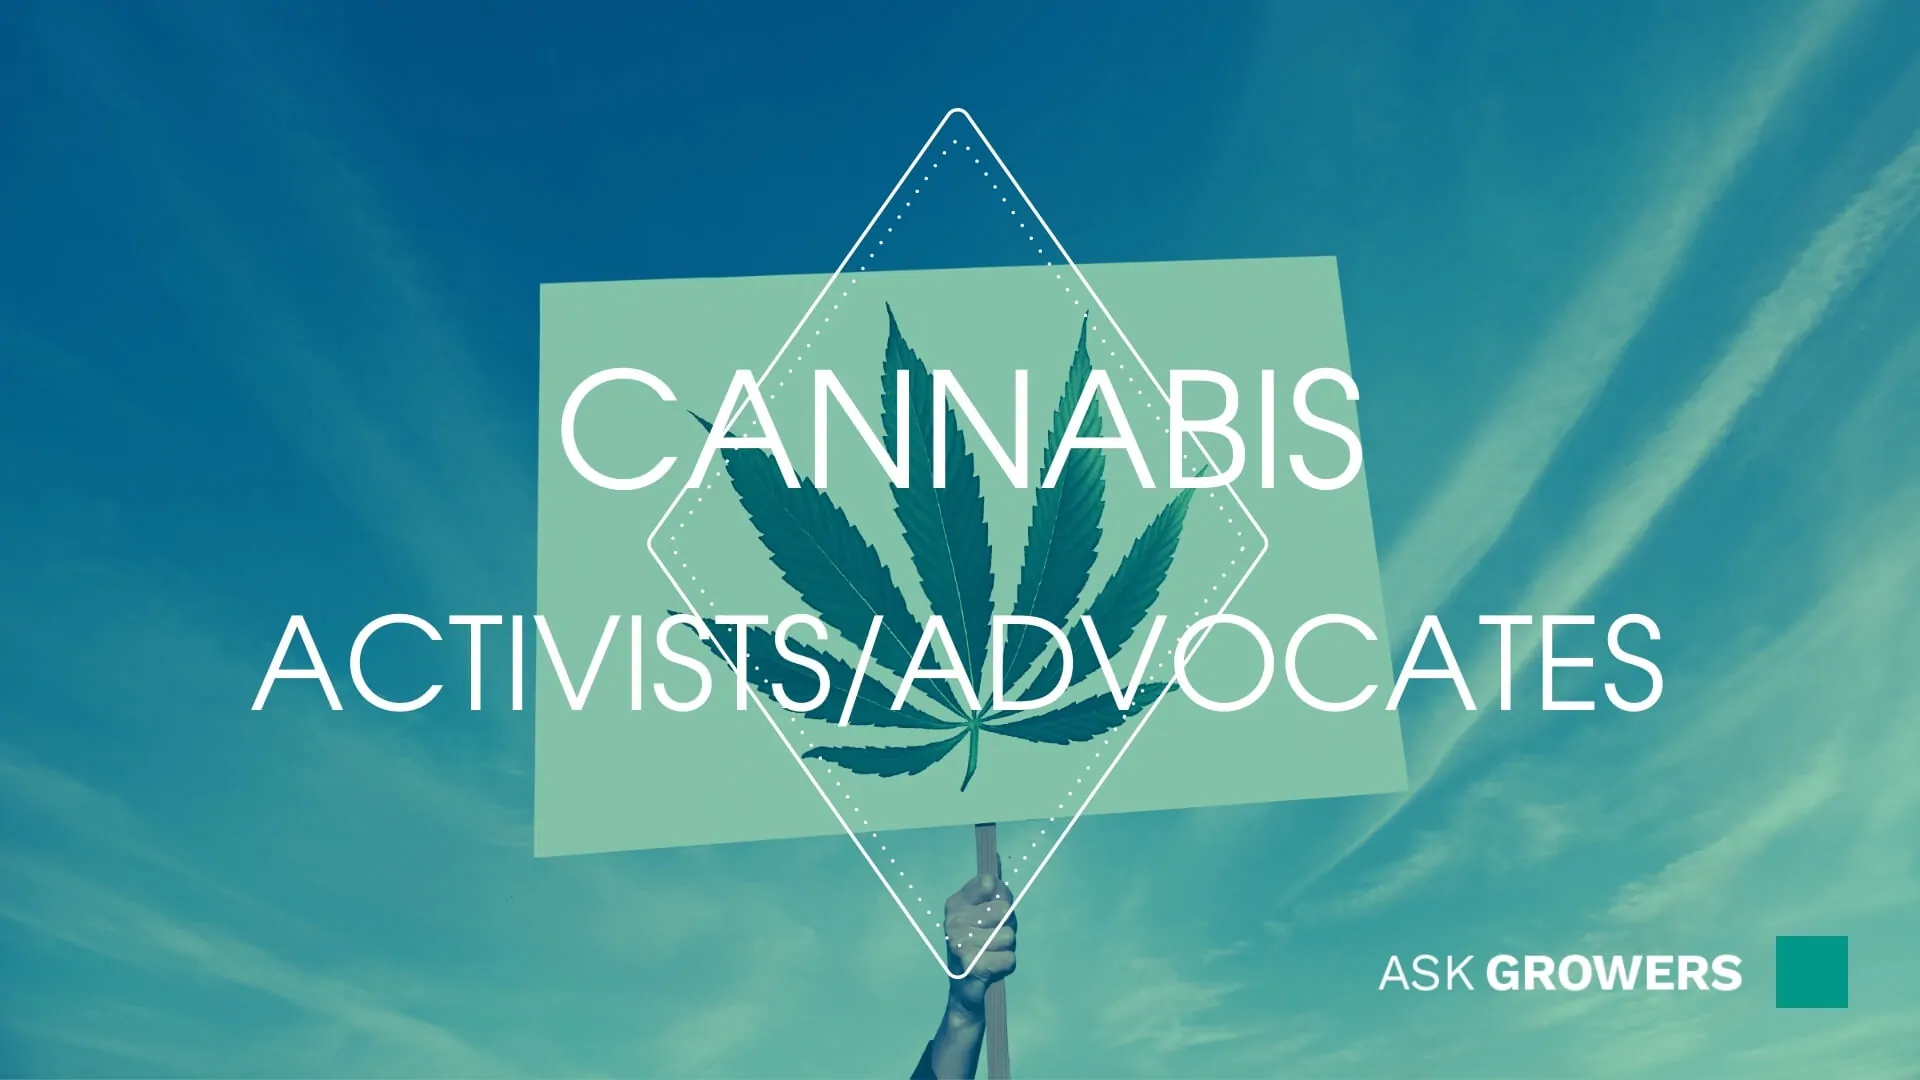 Cannabis Activists/Advocates